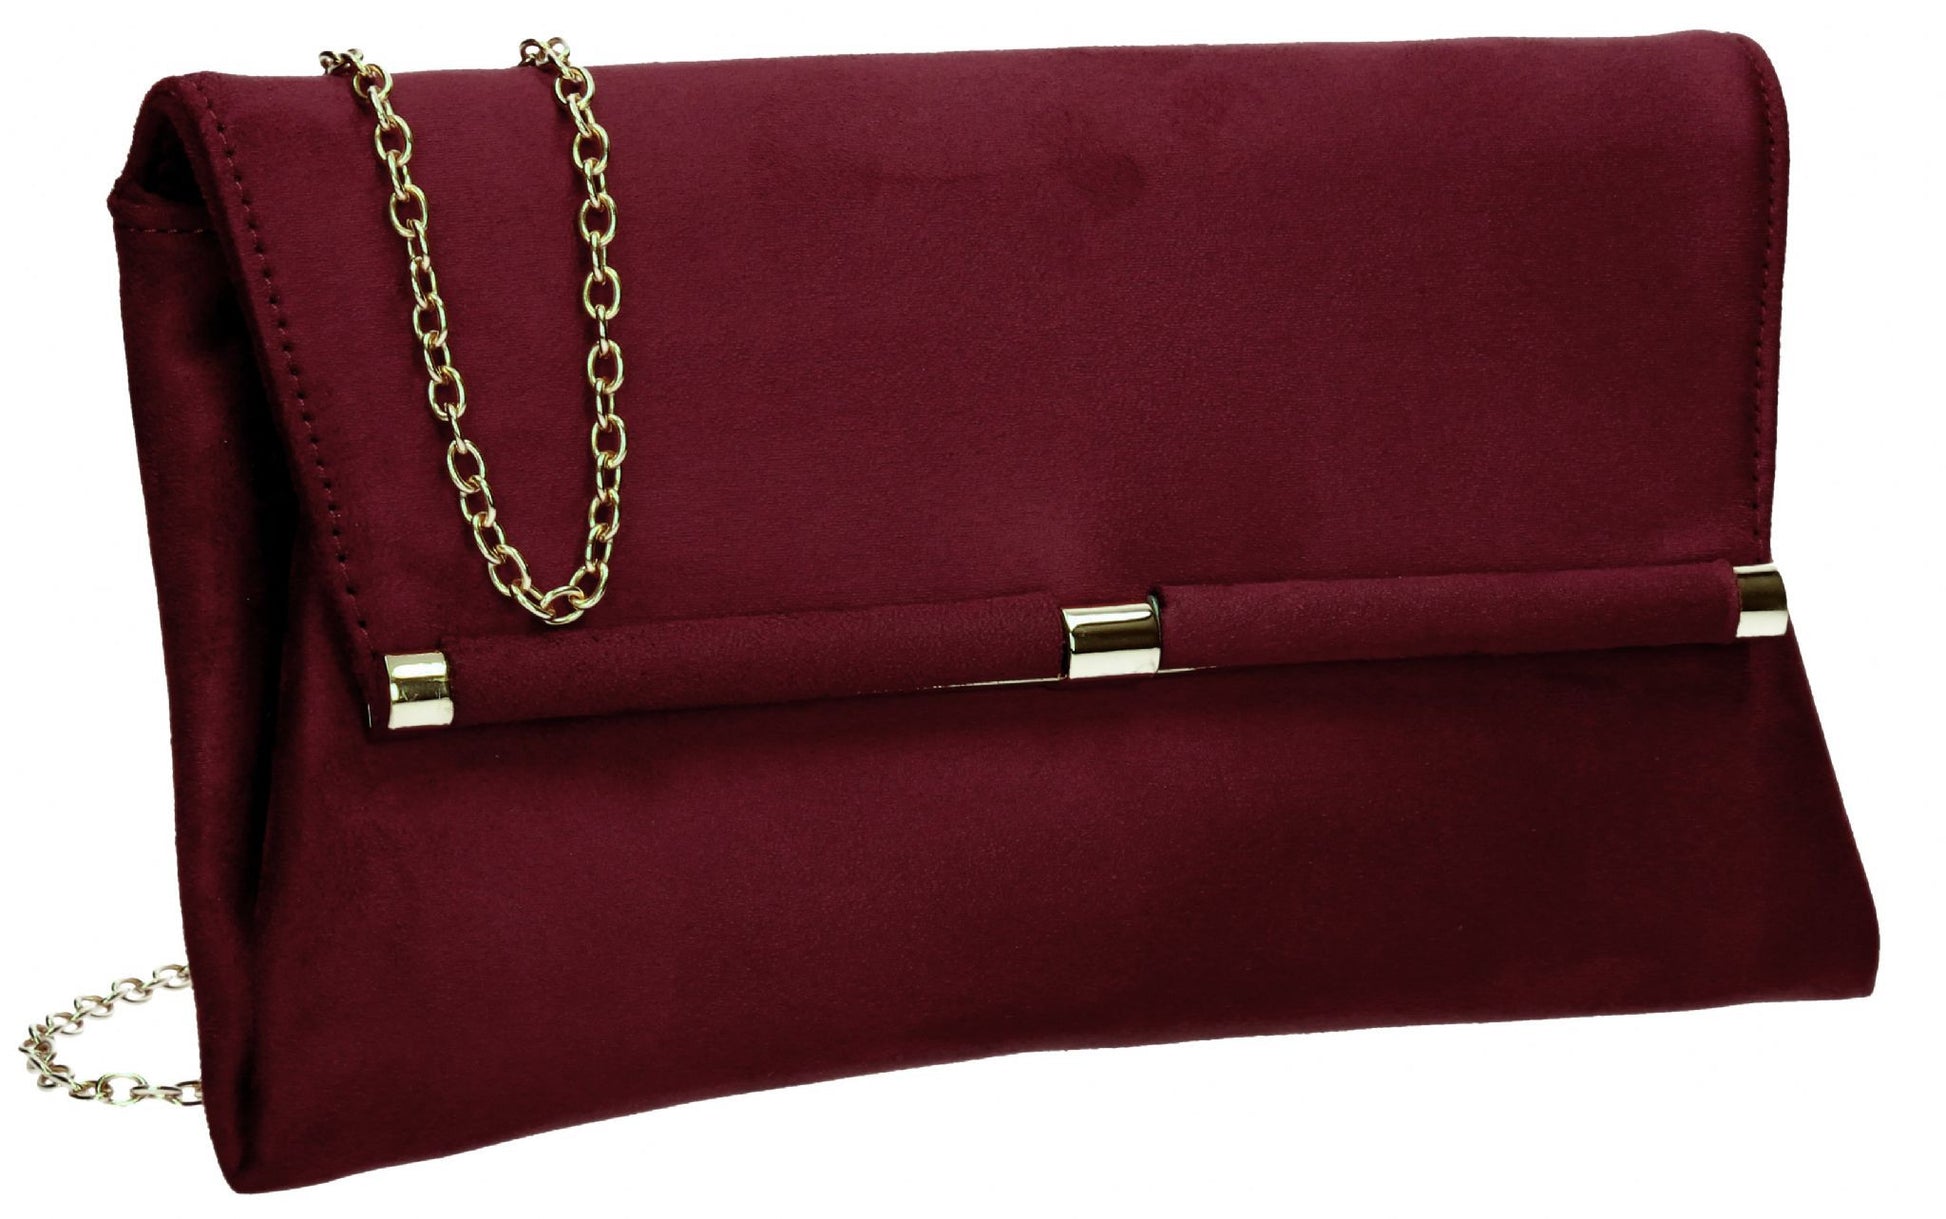 SWANKYSWANS Pamela Clutch Bag Burgundy Cute Cheap Clutch Bag For Weddings School and Work